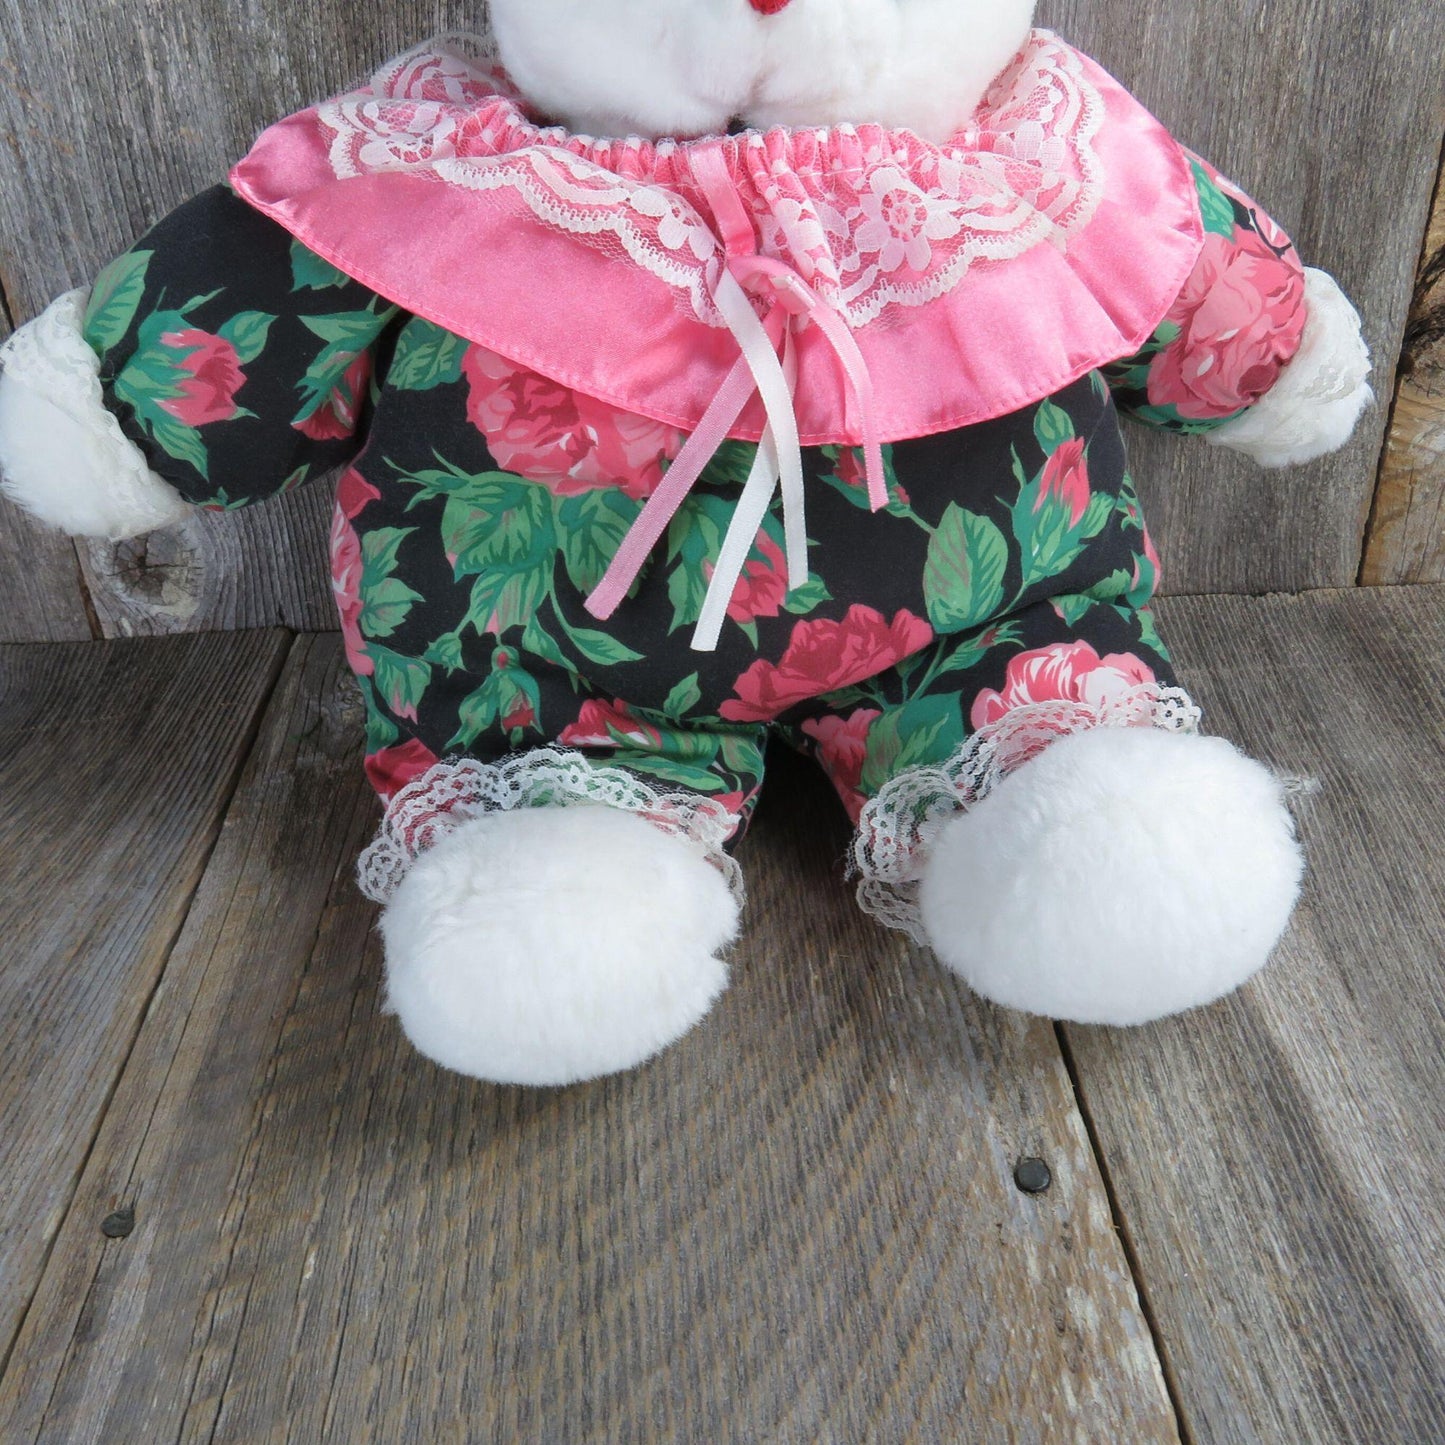 Vintage Bear Plush Fabric Body White Pink Flowers Green Black Stuffed Animal